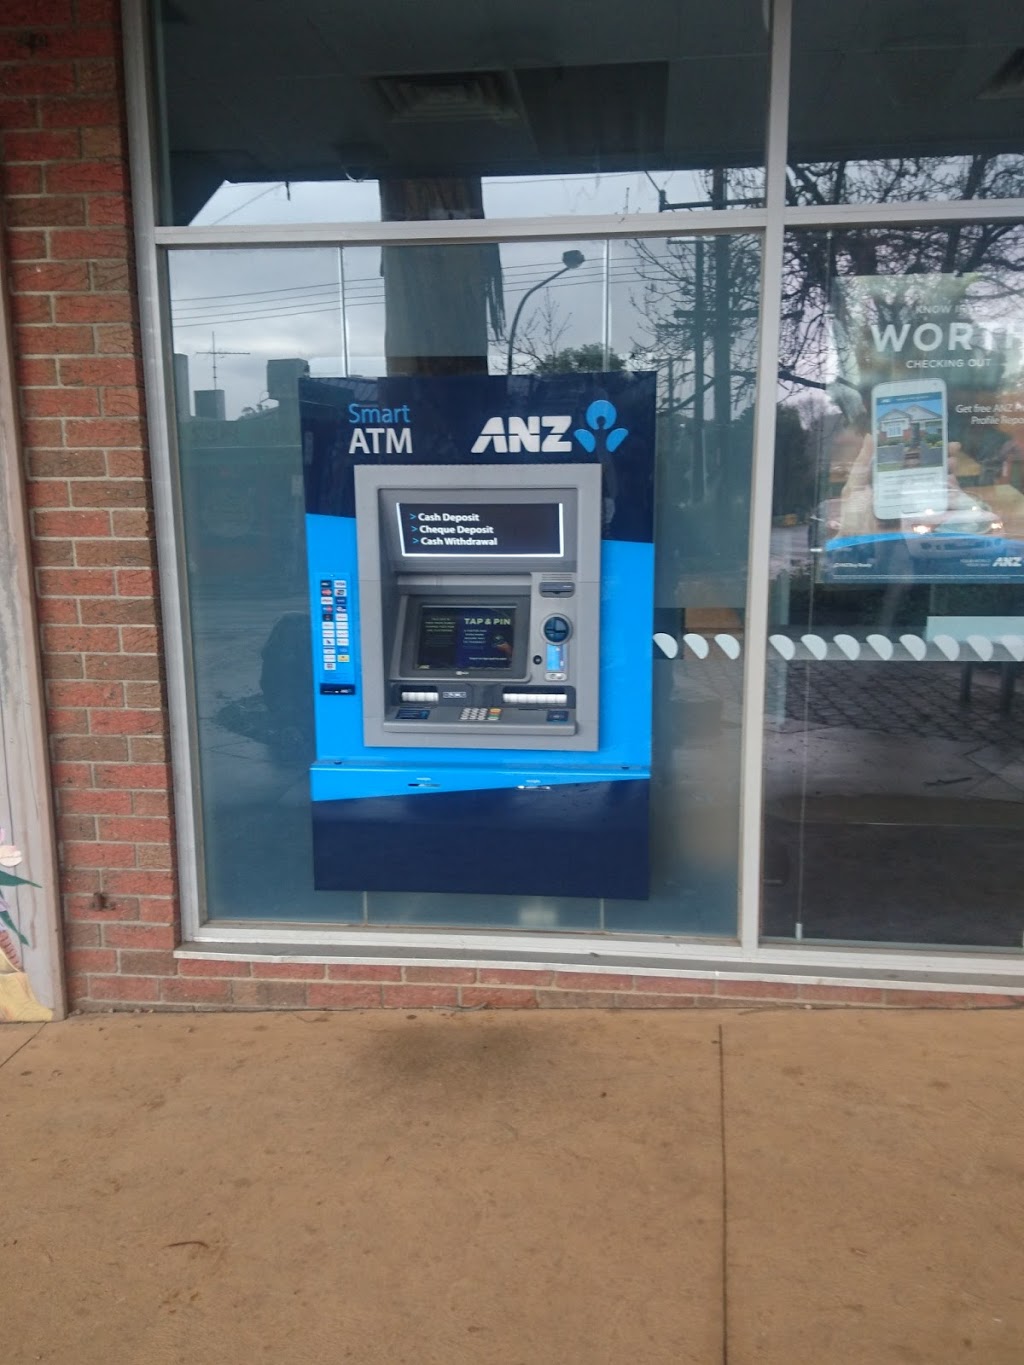 ANZ ATM Monbulk (Smart) | atm | 90 Main Rd, Monbulk VIC 3793, Australia | 131314 OR +61 131314